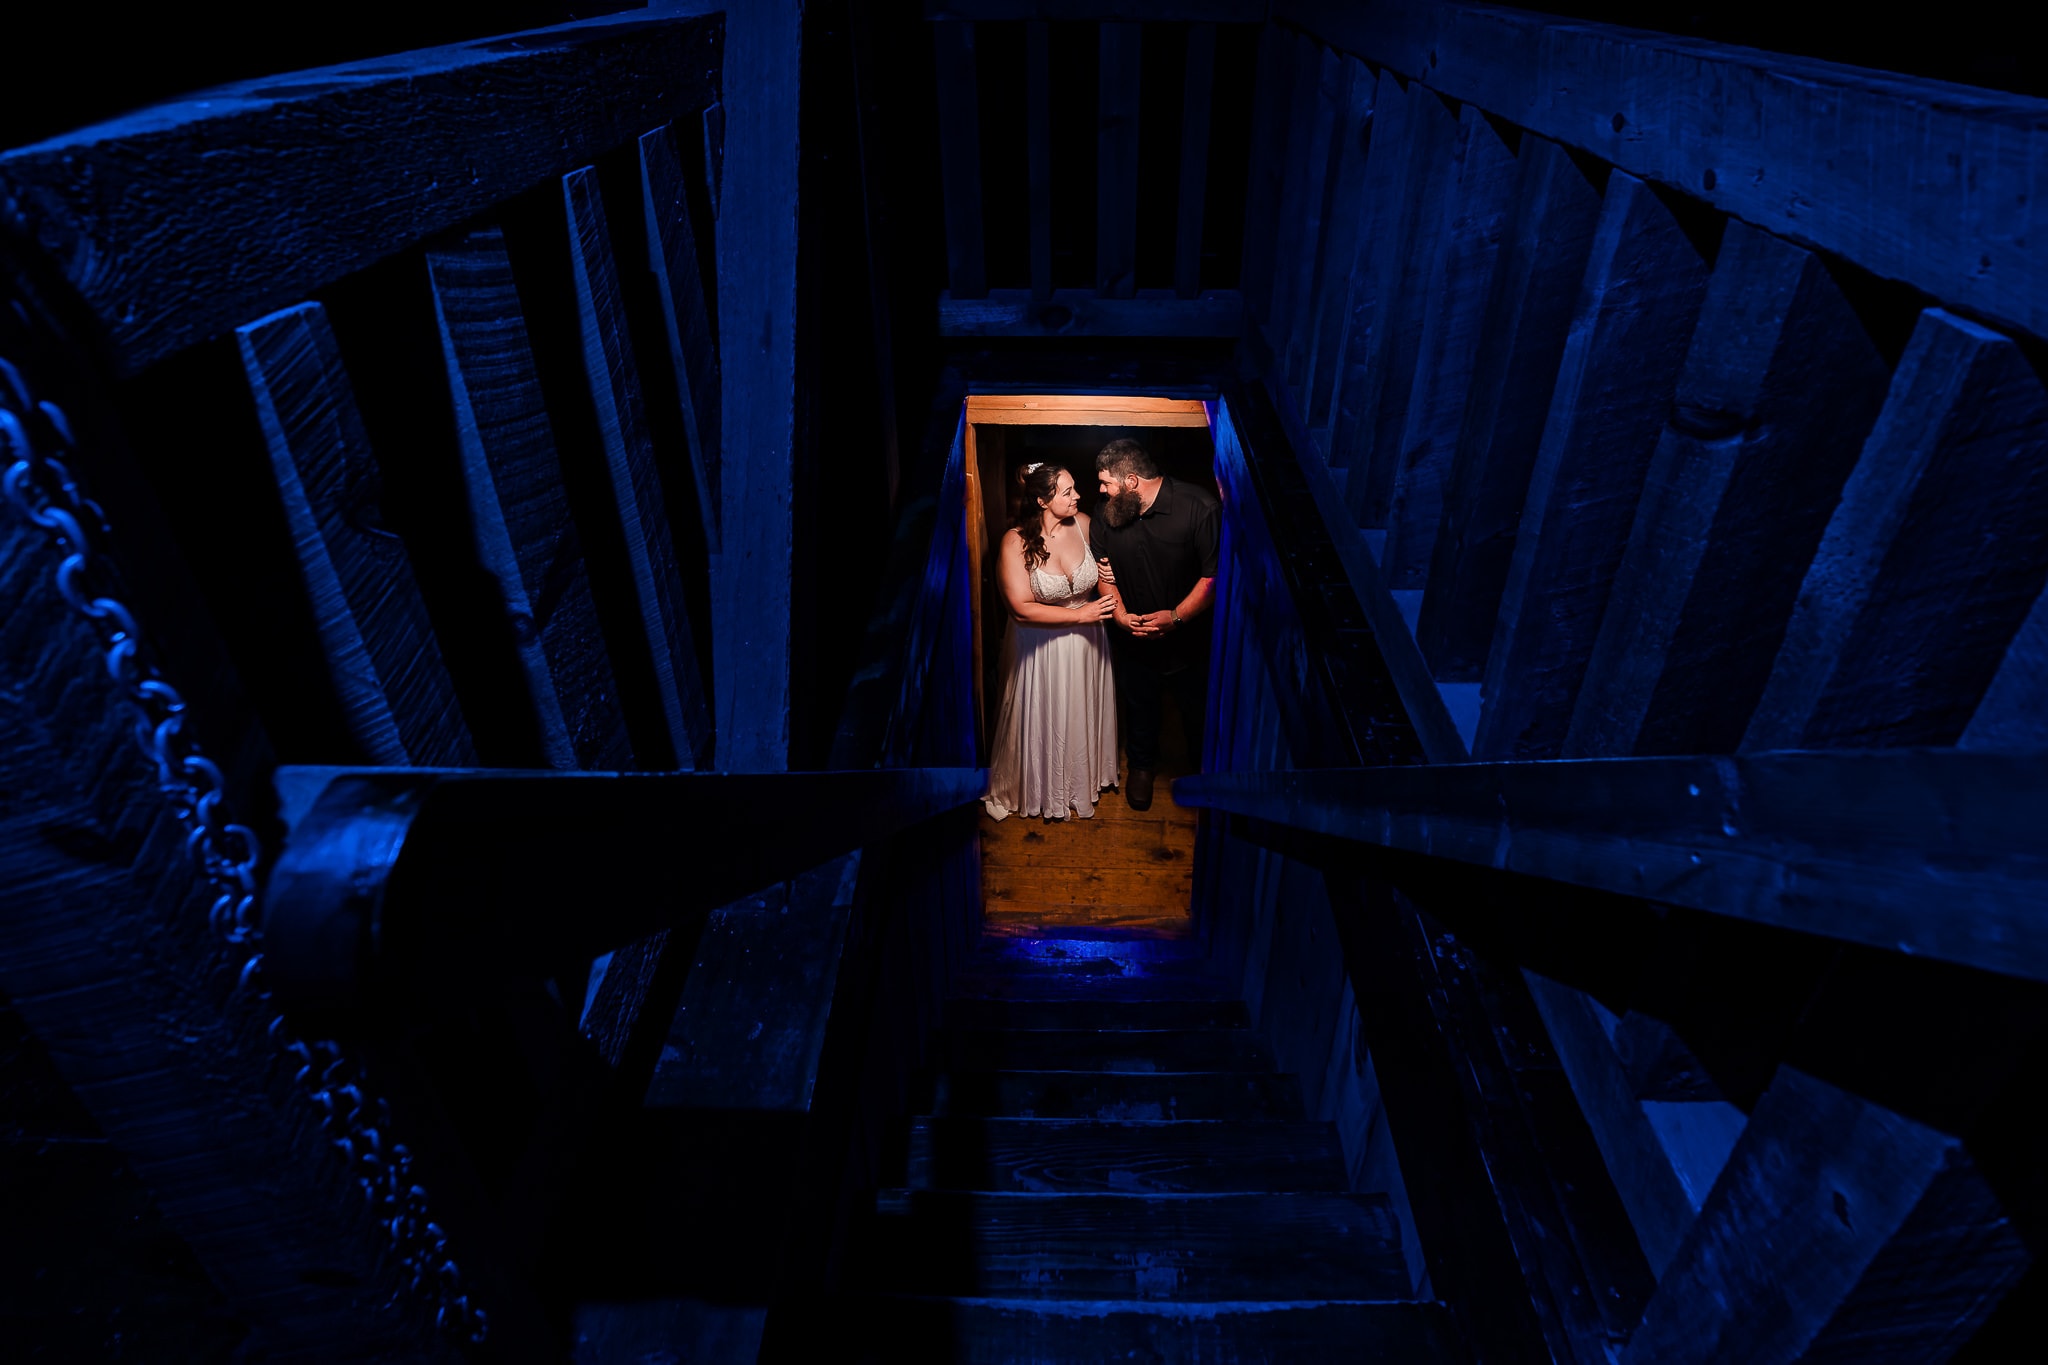 laurel-rock-barn-wedding-stairs-colors-couple-portrait